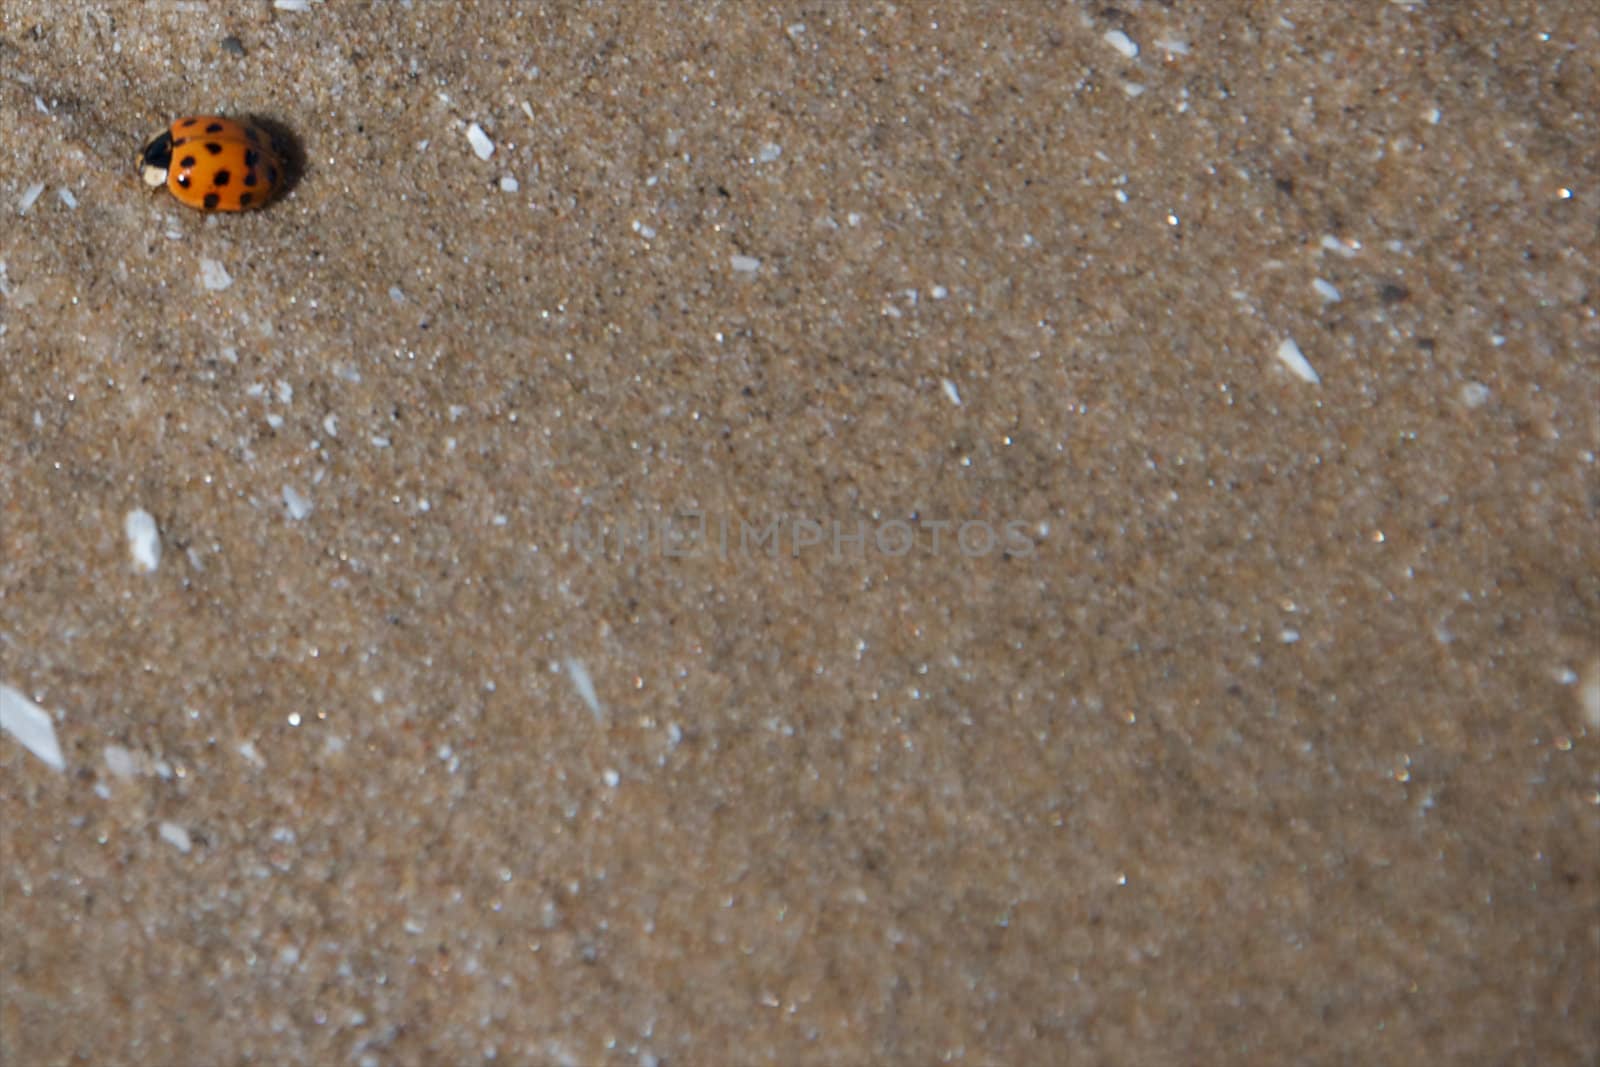 A ladybug on the beach at Sandbanks Provincial Park, Ontario.